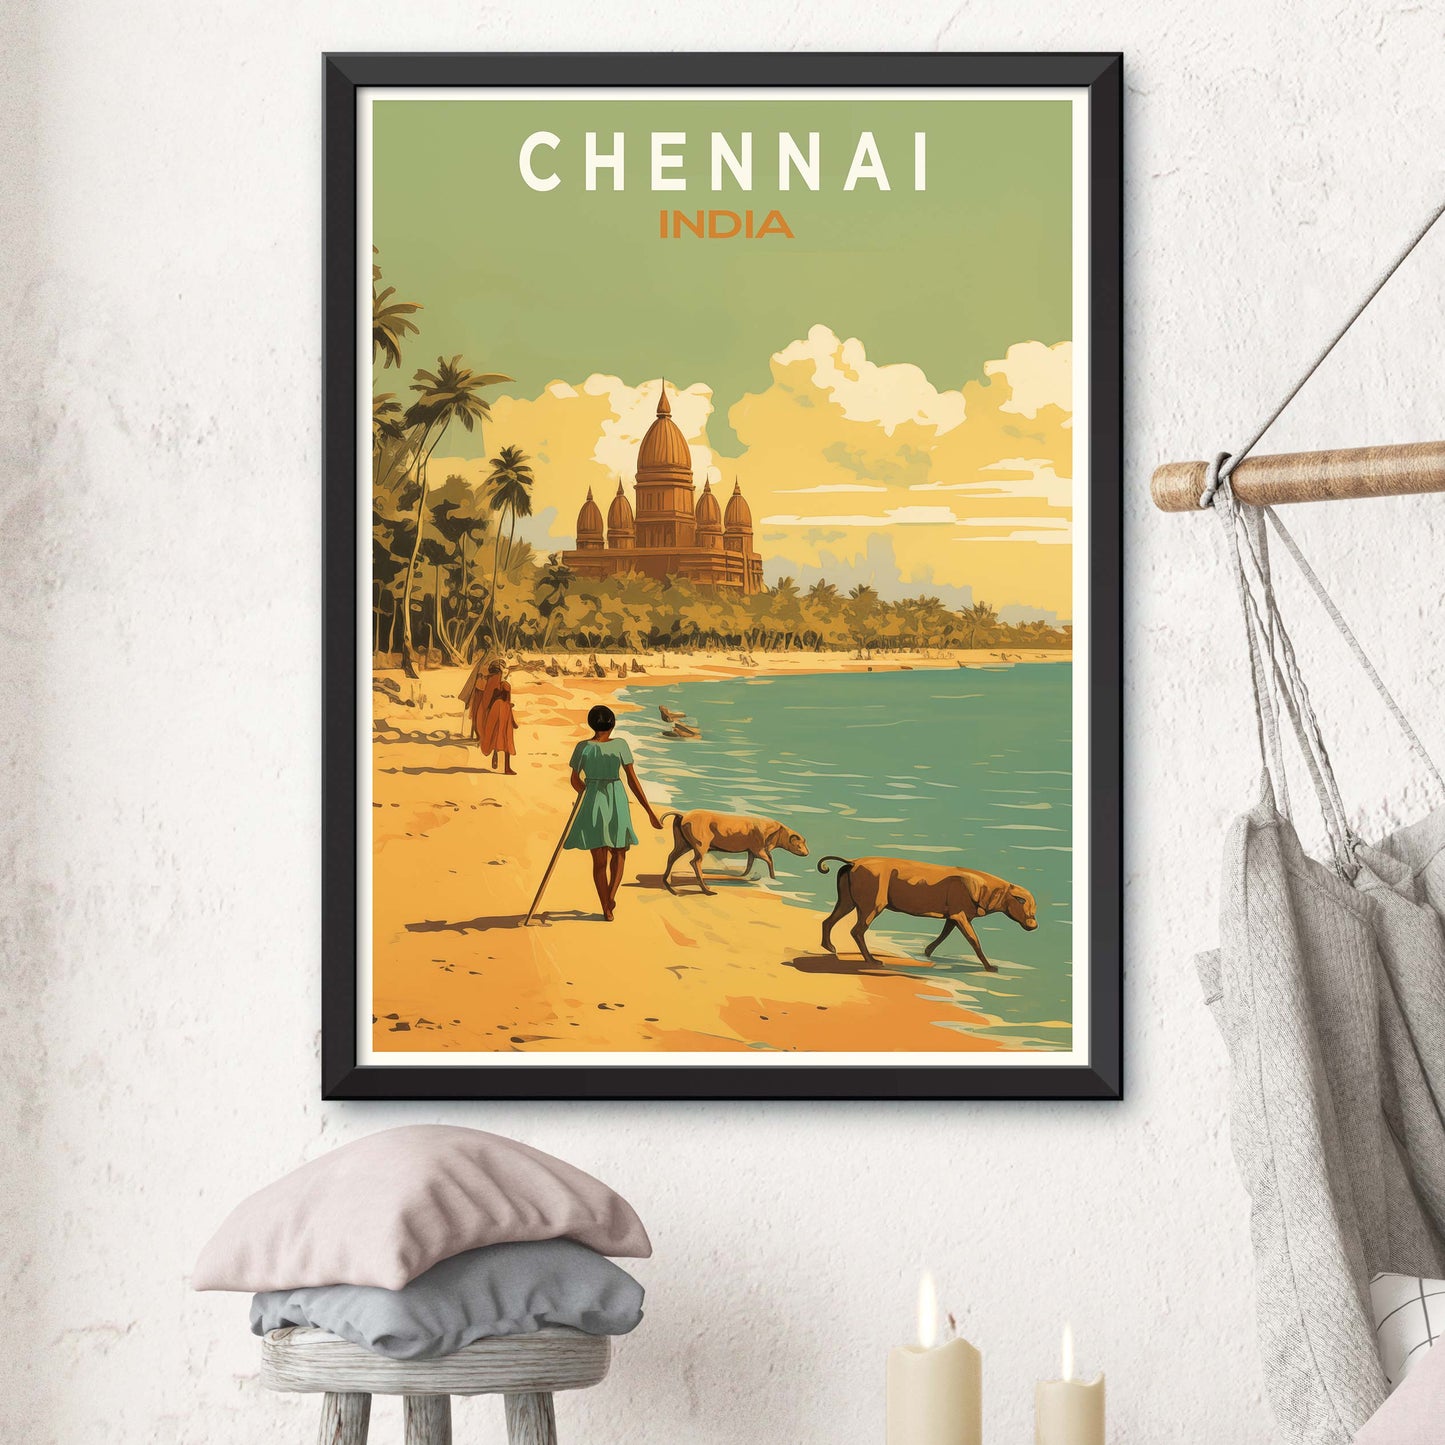 Chennai Chronicles: A Kaleidoscope of South Indian Splendor